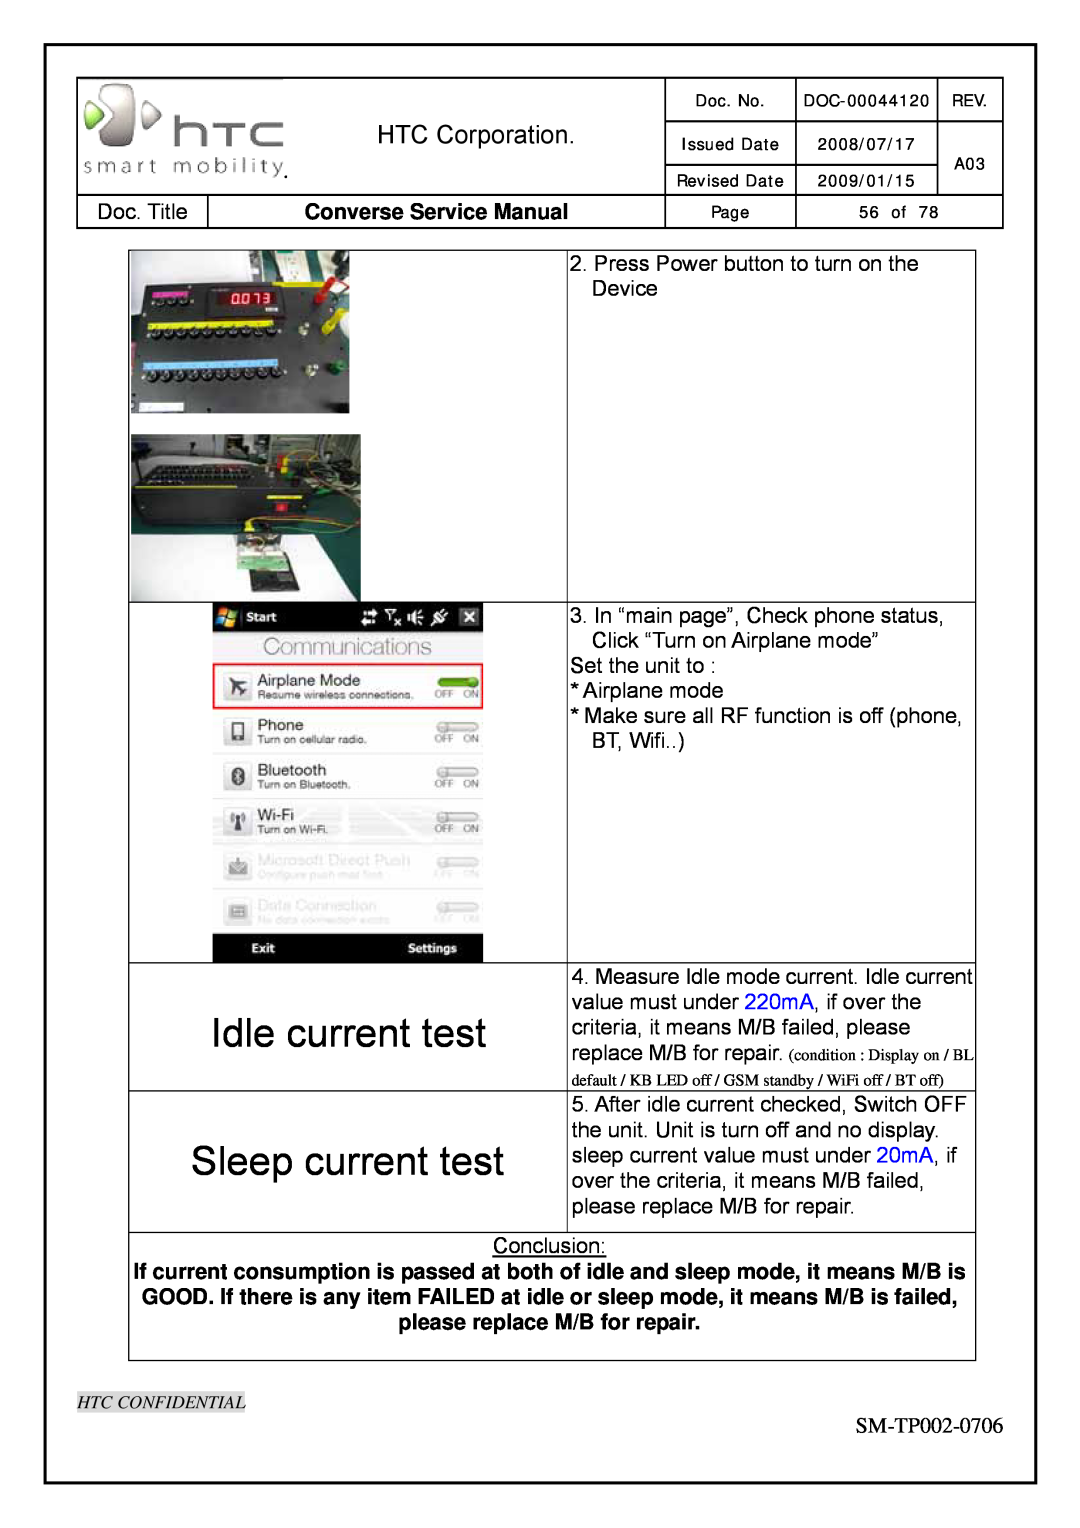 HTC SM-TP002-0706 service manual Idle current test, Sleep current test, HTC Corporation, Converse Service Manual 